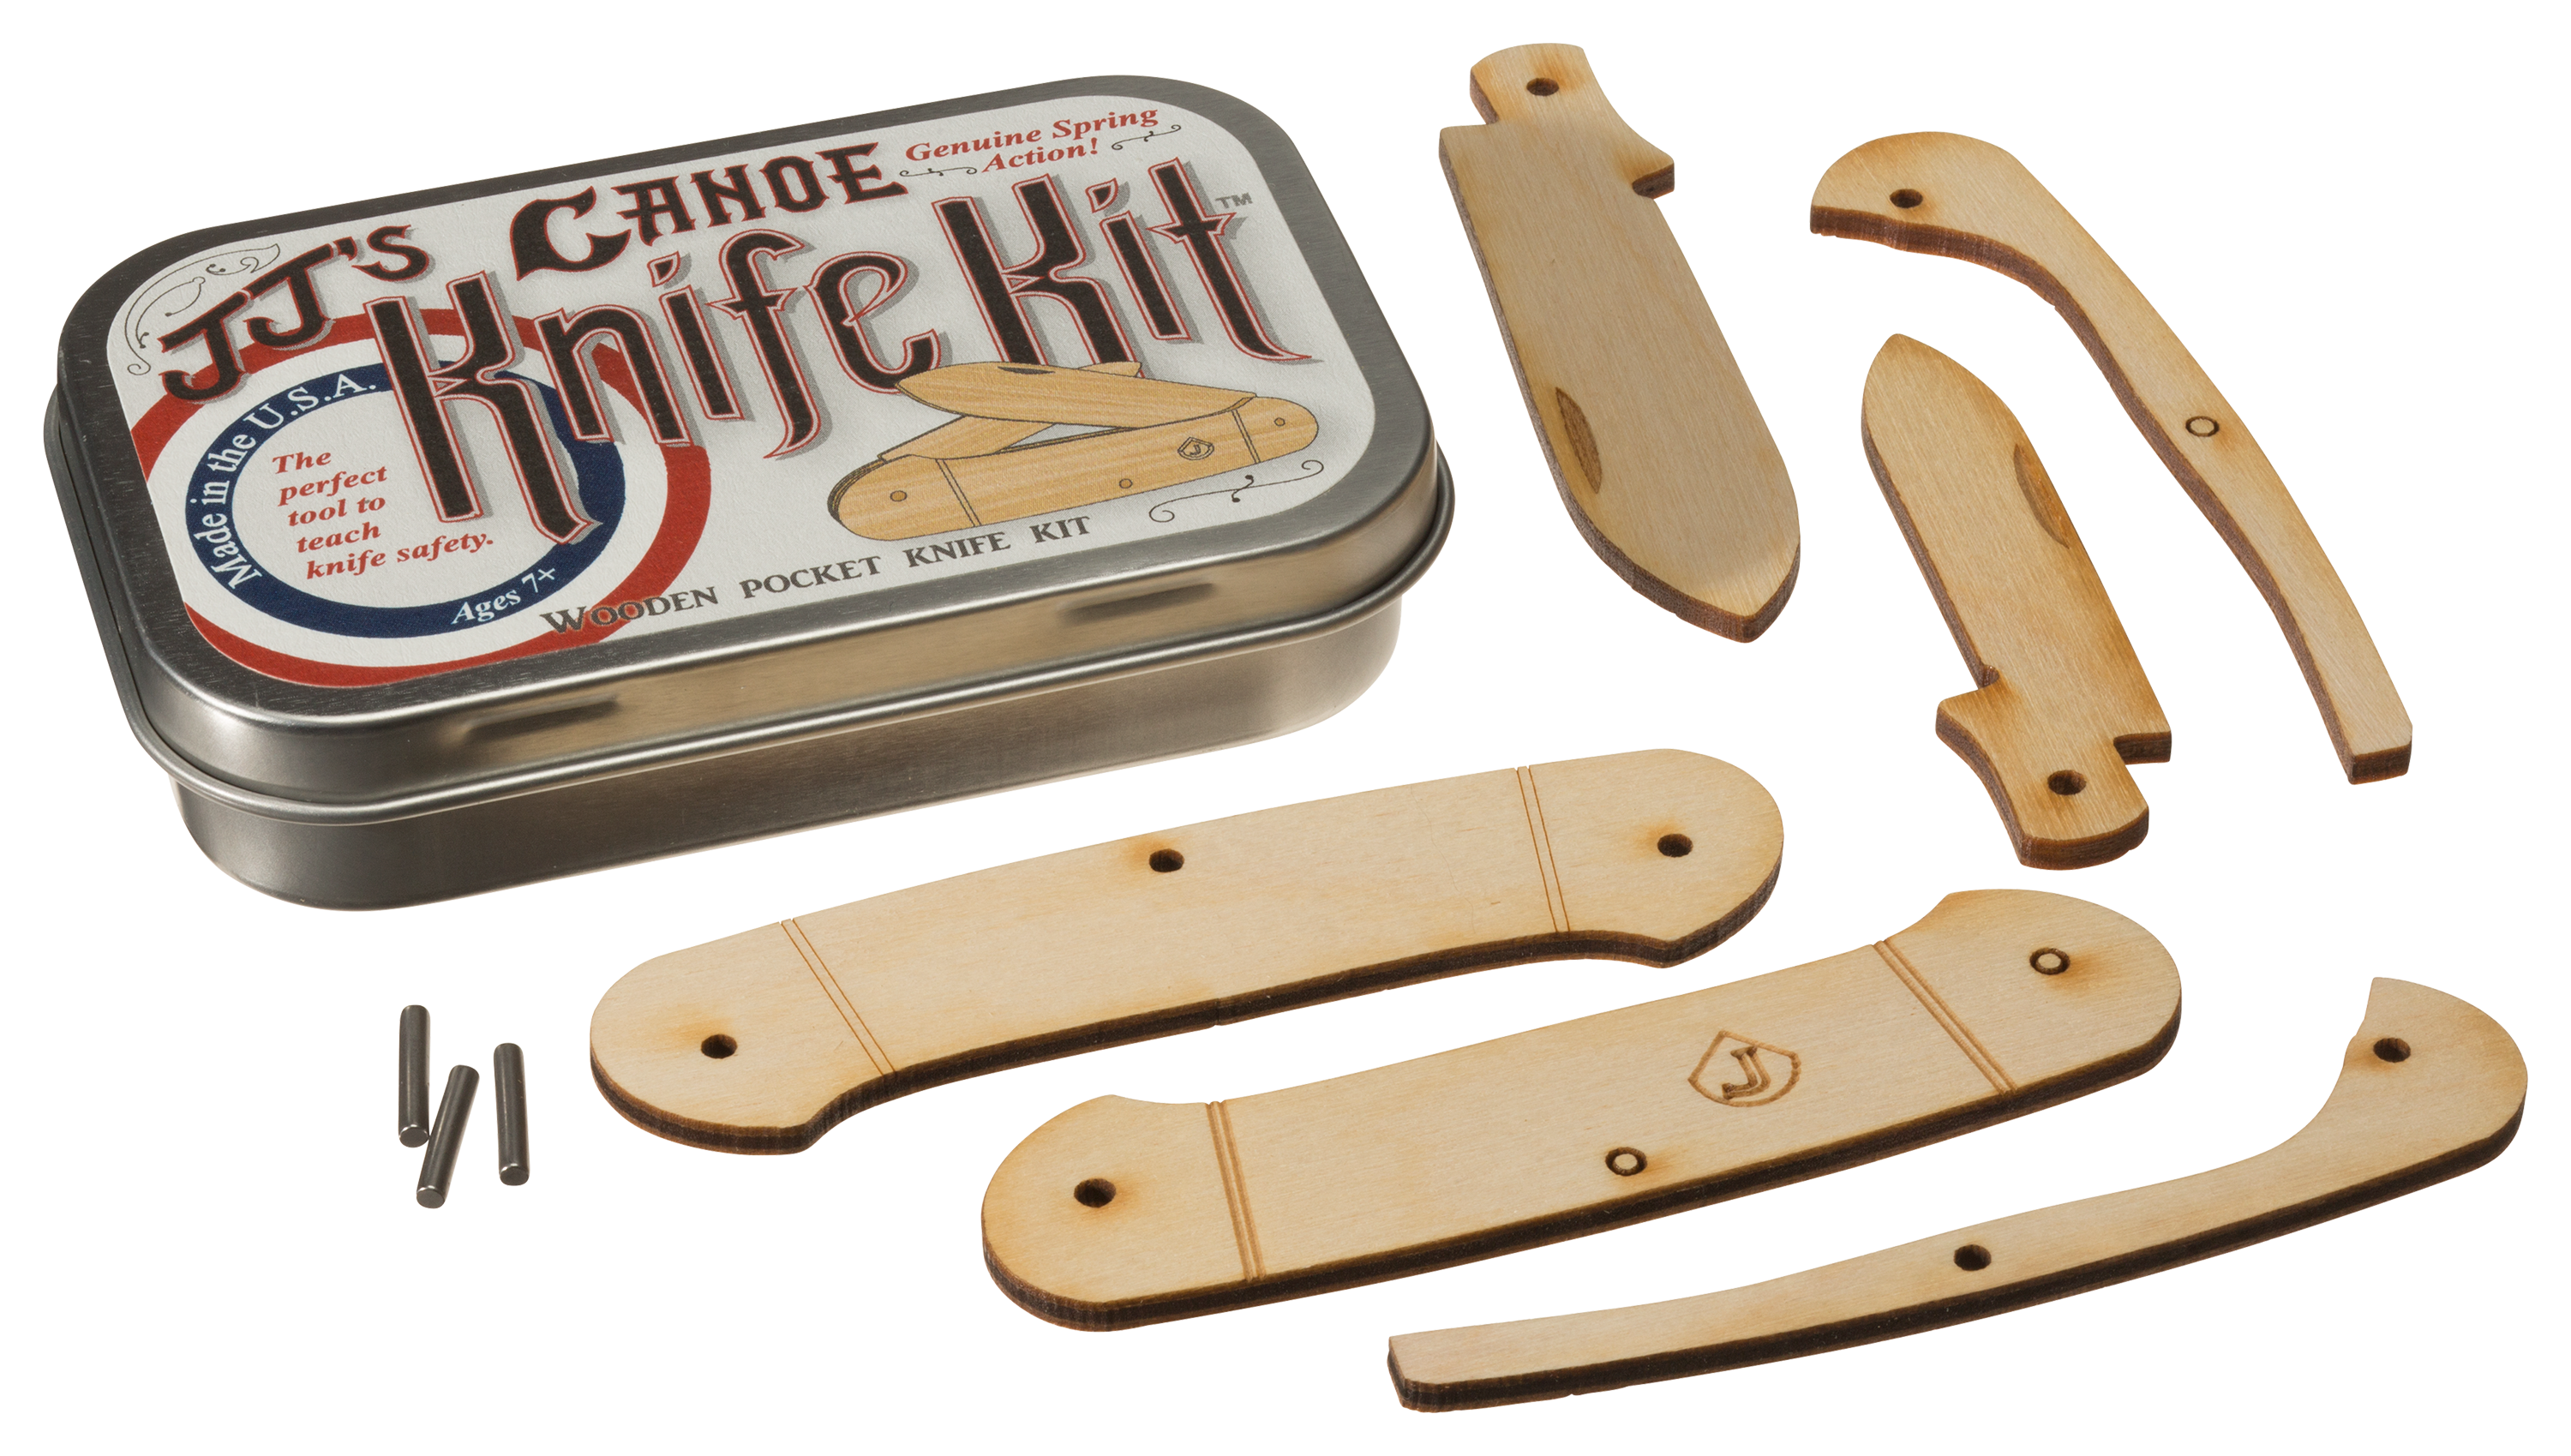 Channel Craft JJ's Wooden Canoe Pocket Knife Kit